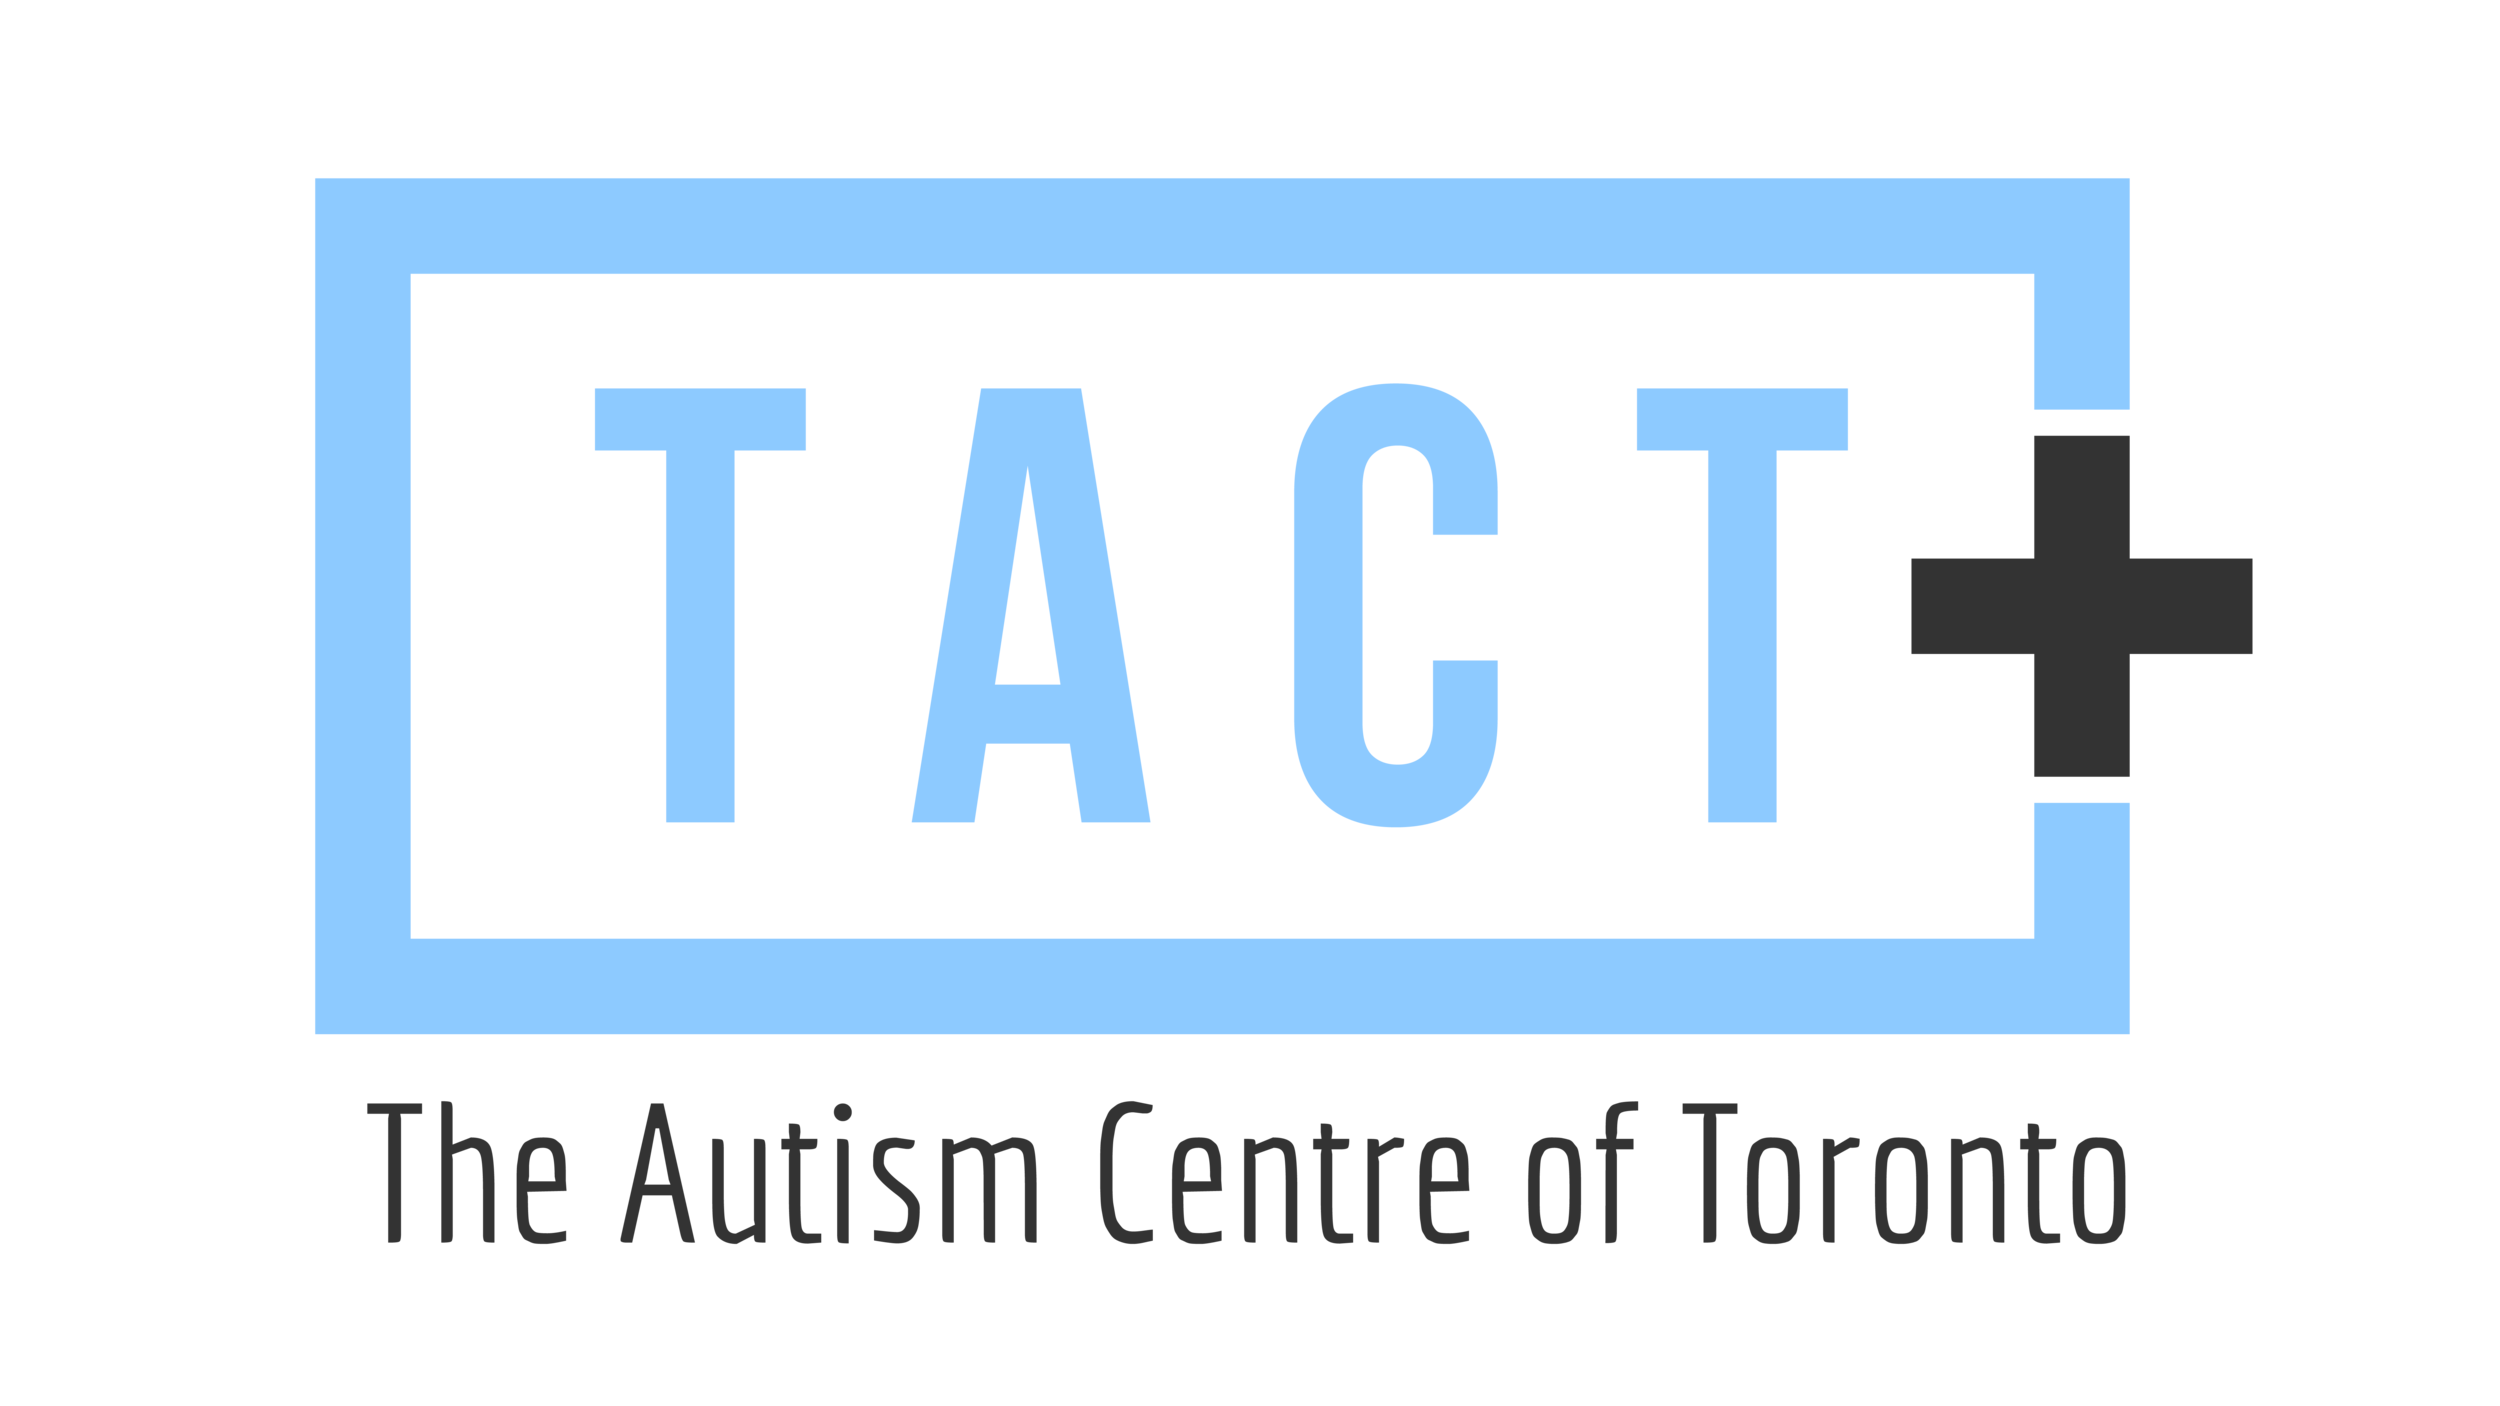 The Autism Centre of Toronto